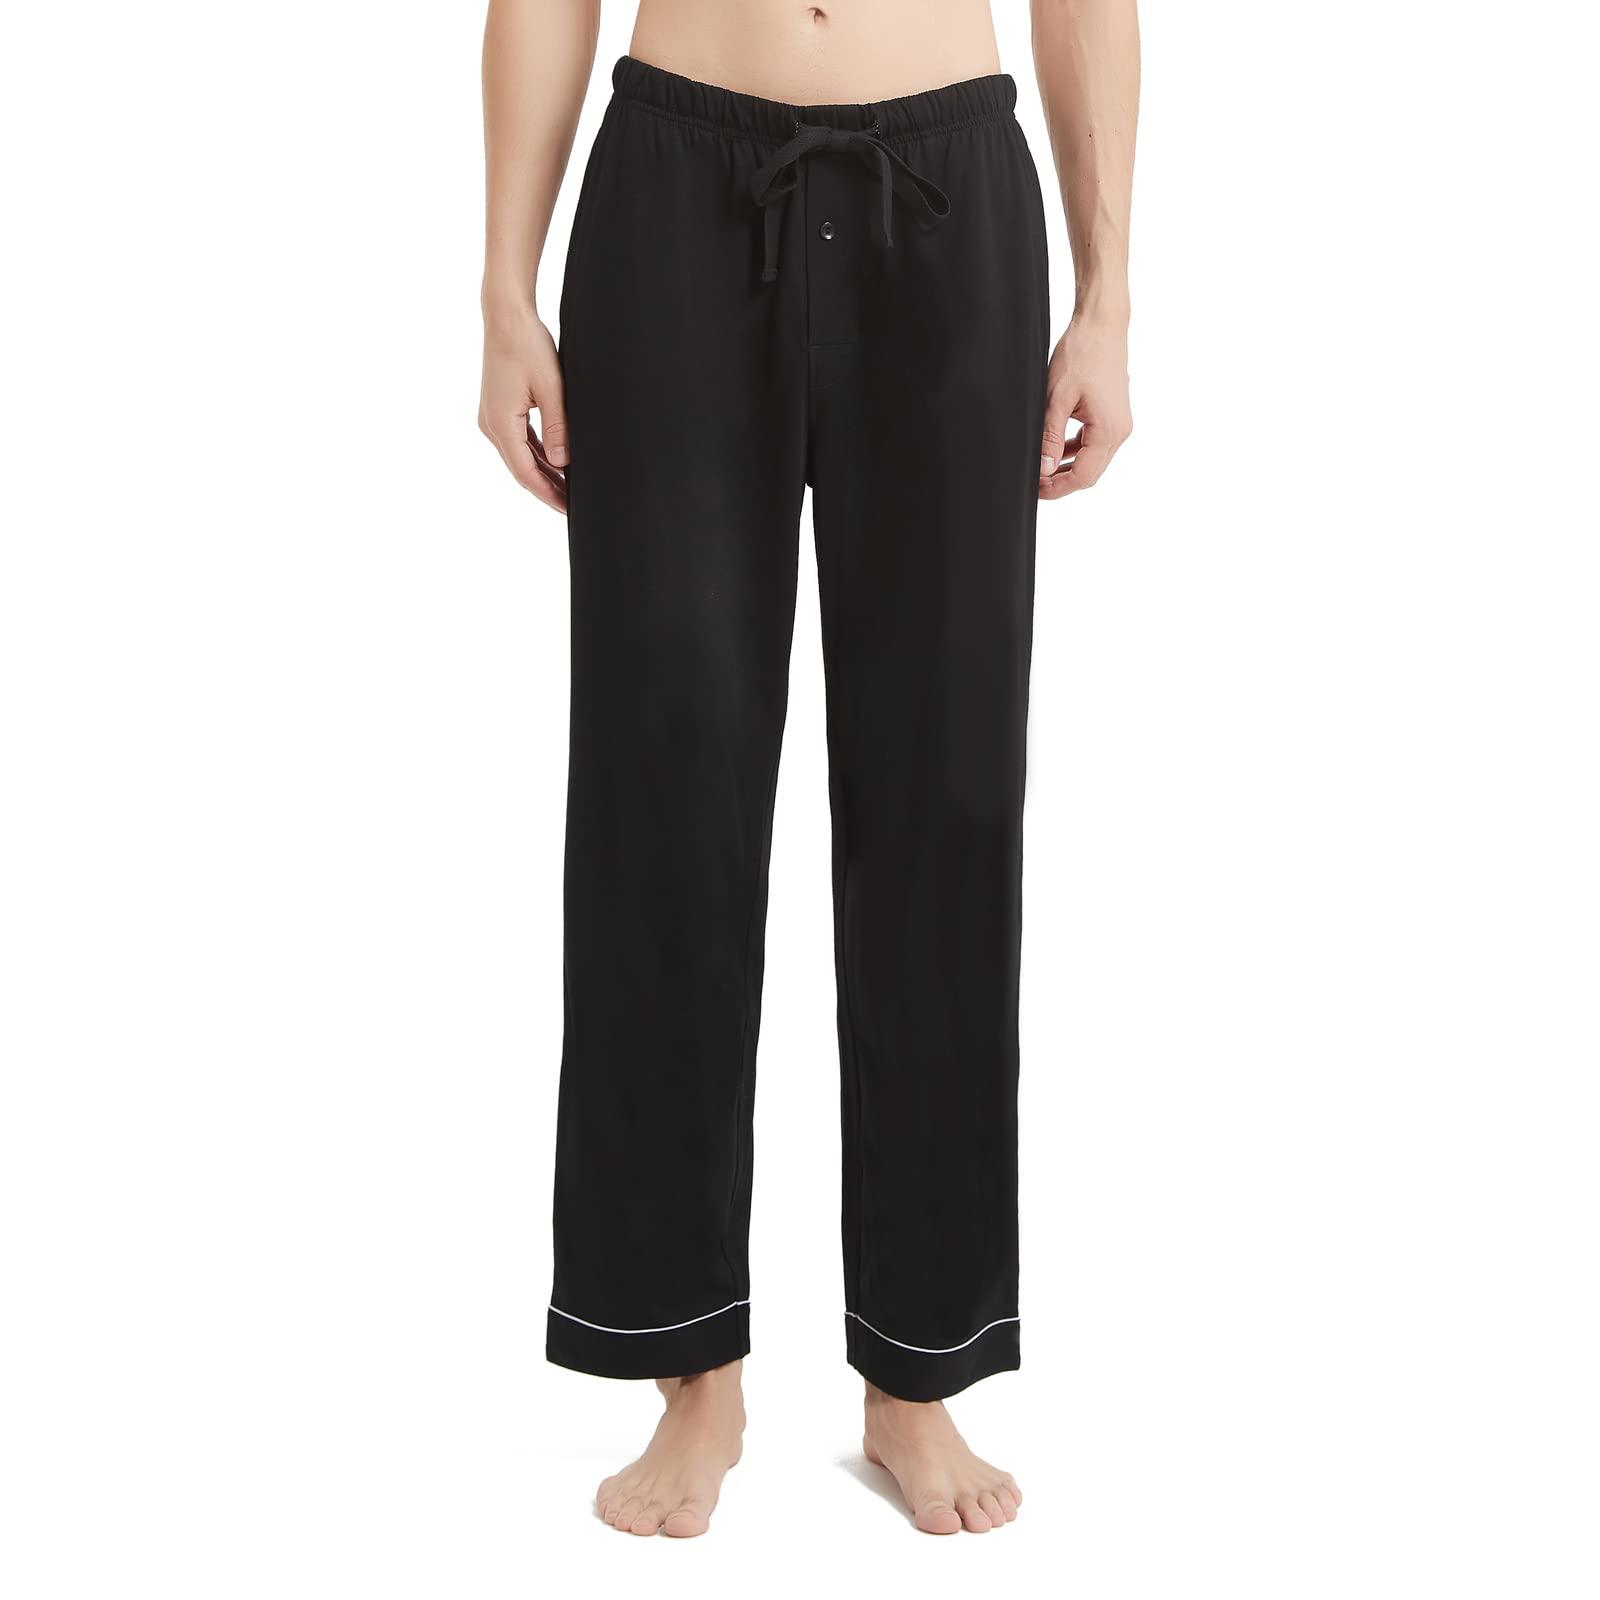 RoomTour Mens Pyjamas Bottom with Pockets Pyjamas for Men Long Pants mens pjs Loungewear Black L